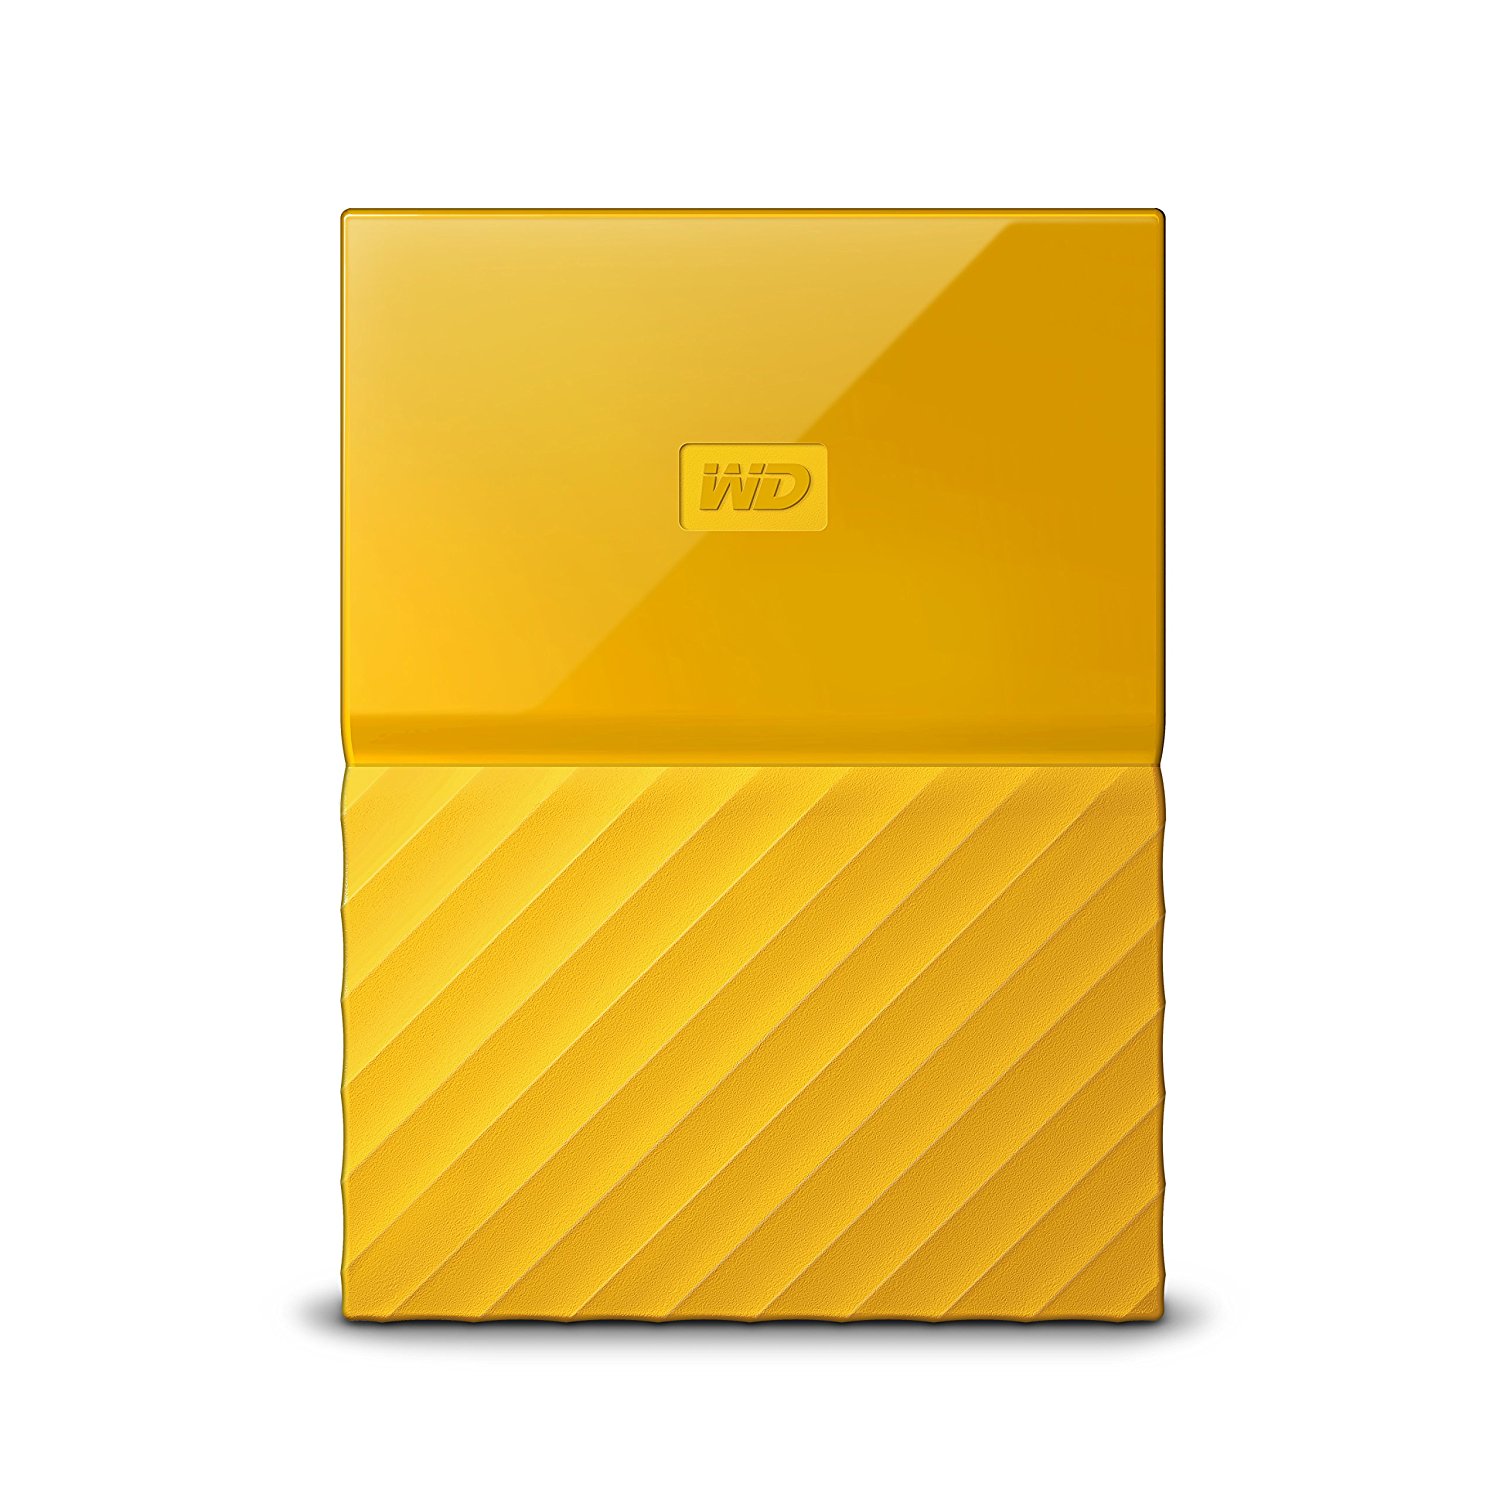 WD My Passport 2TB Portable External Hard Drive (Yellow)